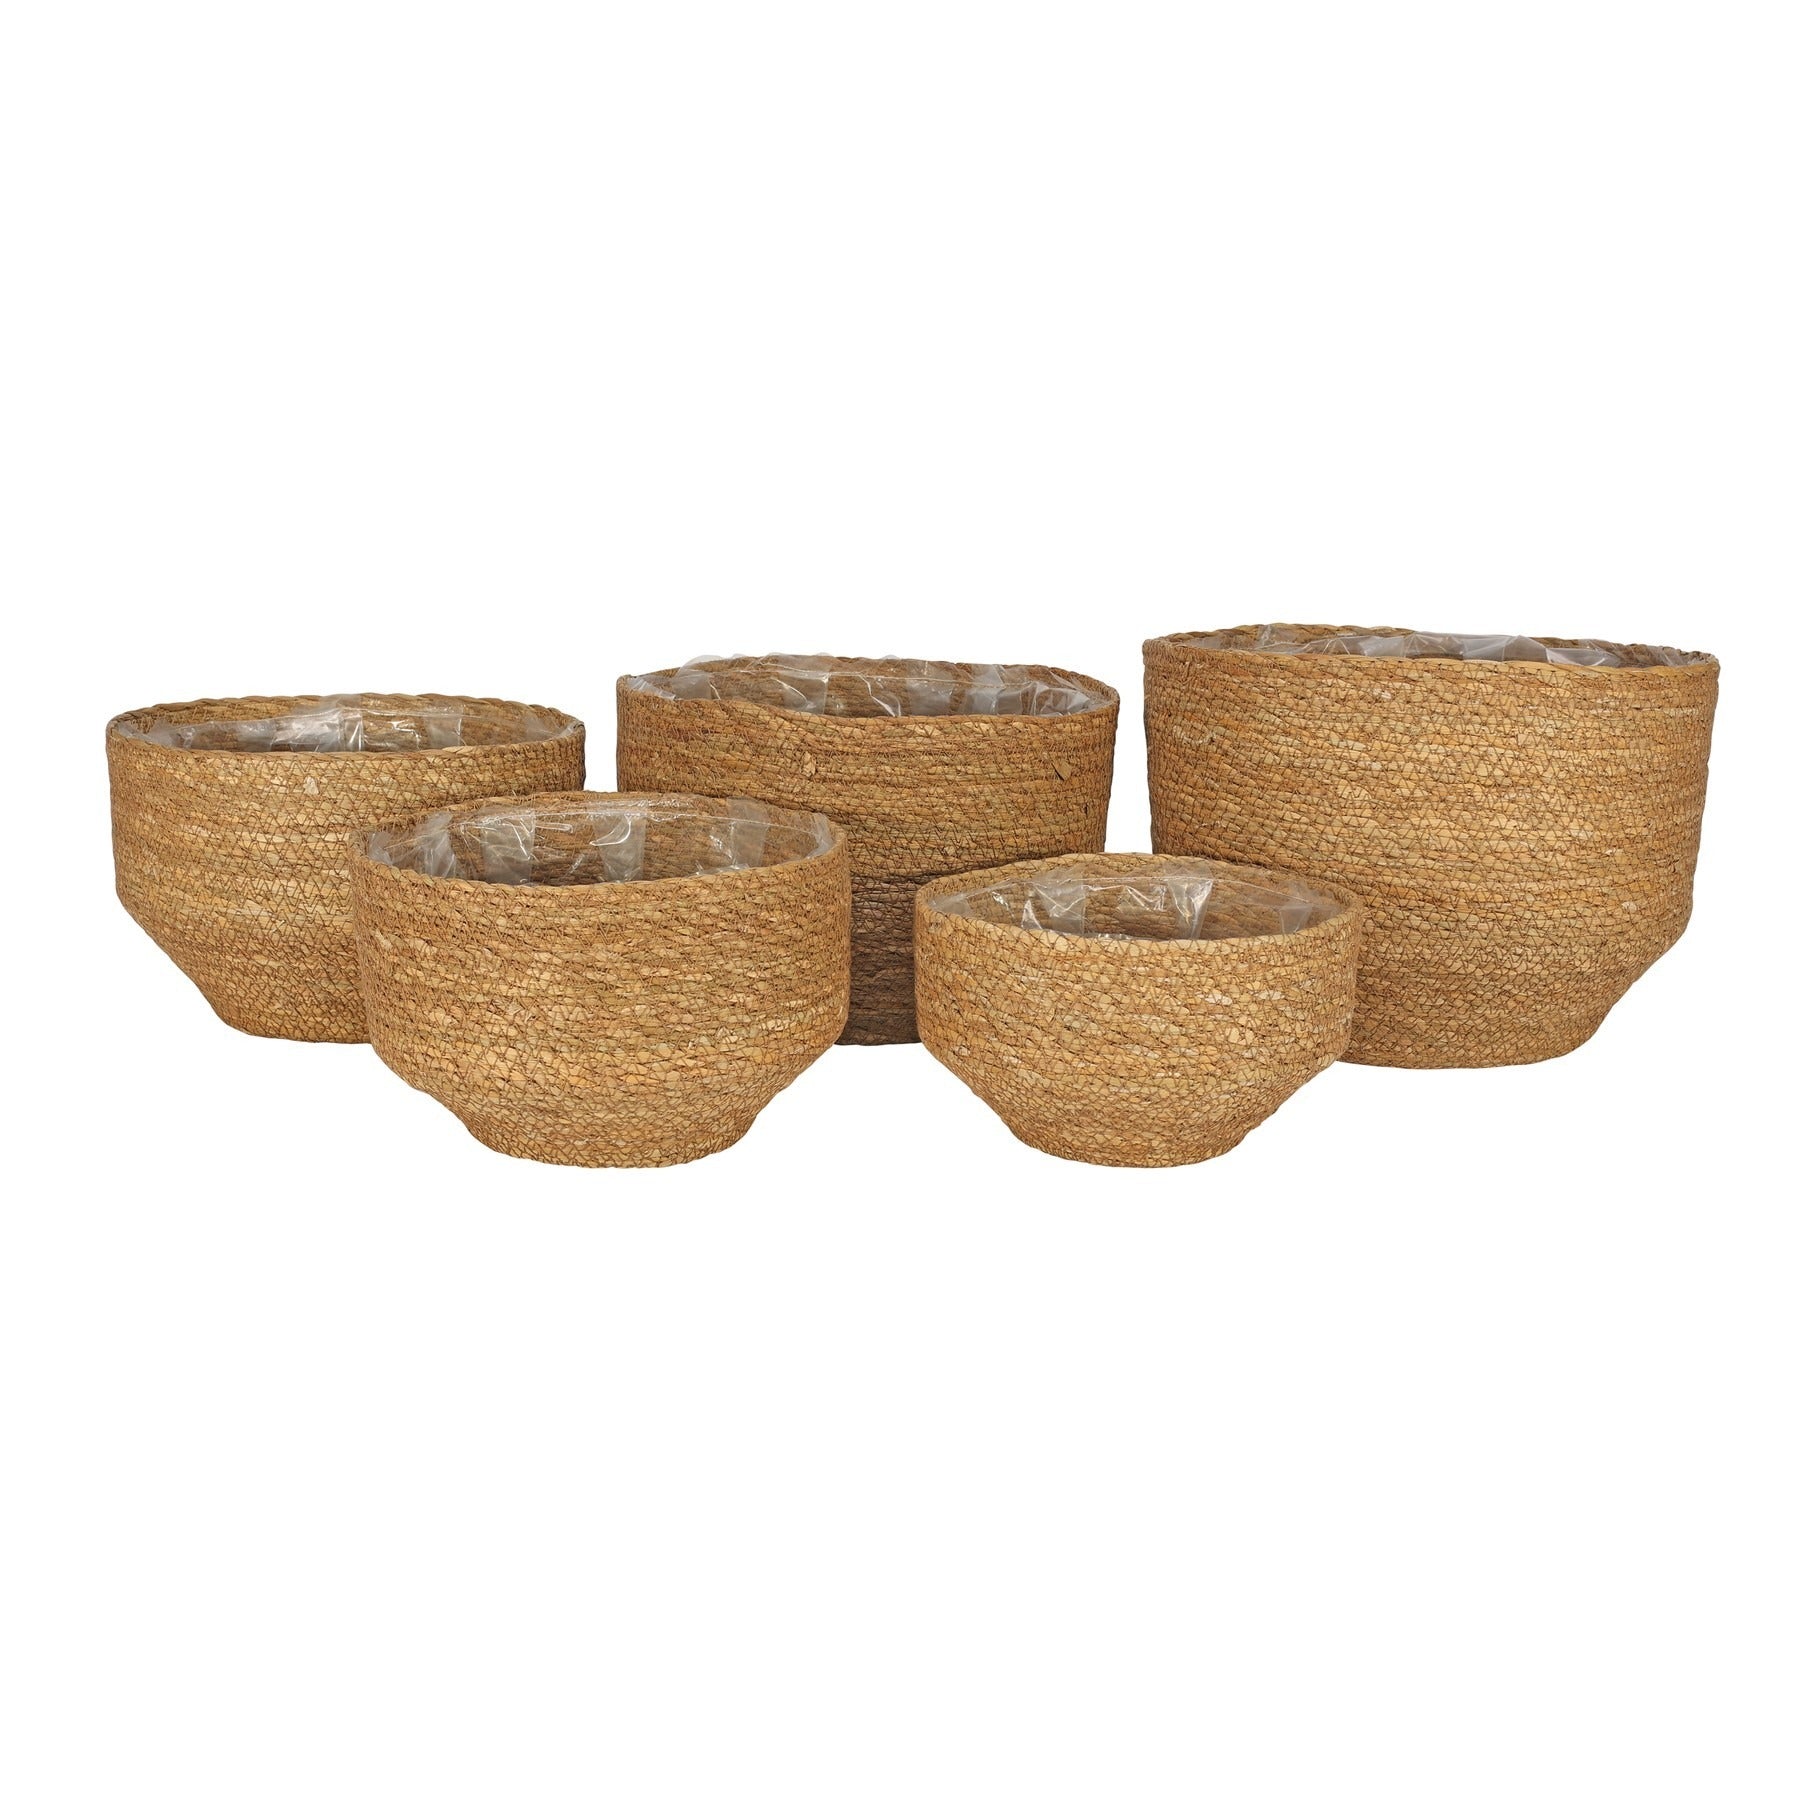 View Set of 5 Hogla Baskets with Liner Natural information